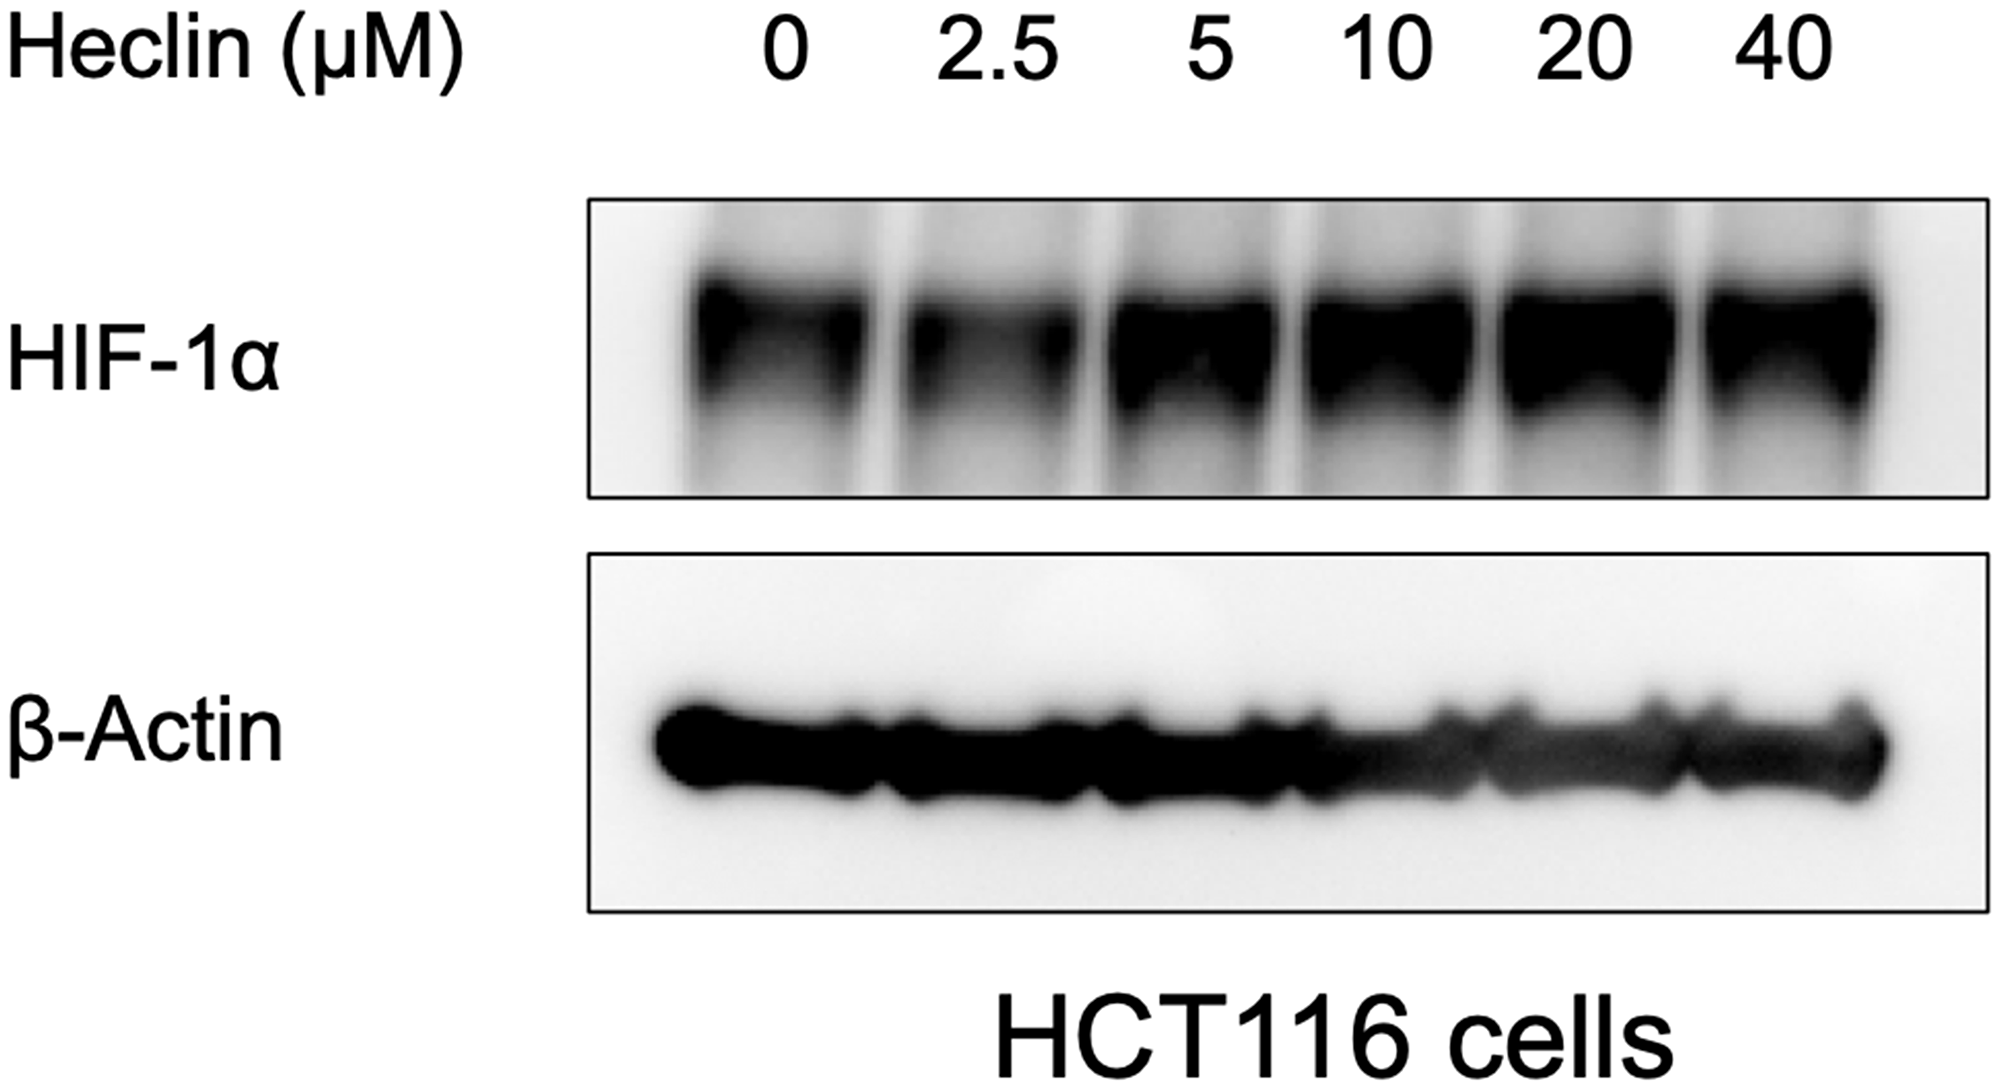 Heclin treatment elevates HIF-1α expression levels.